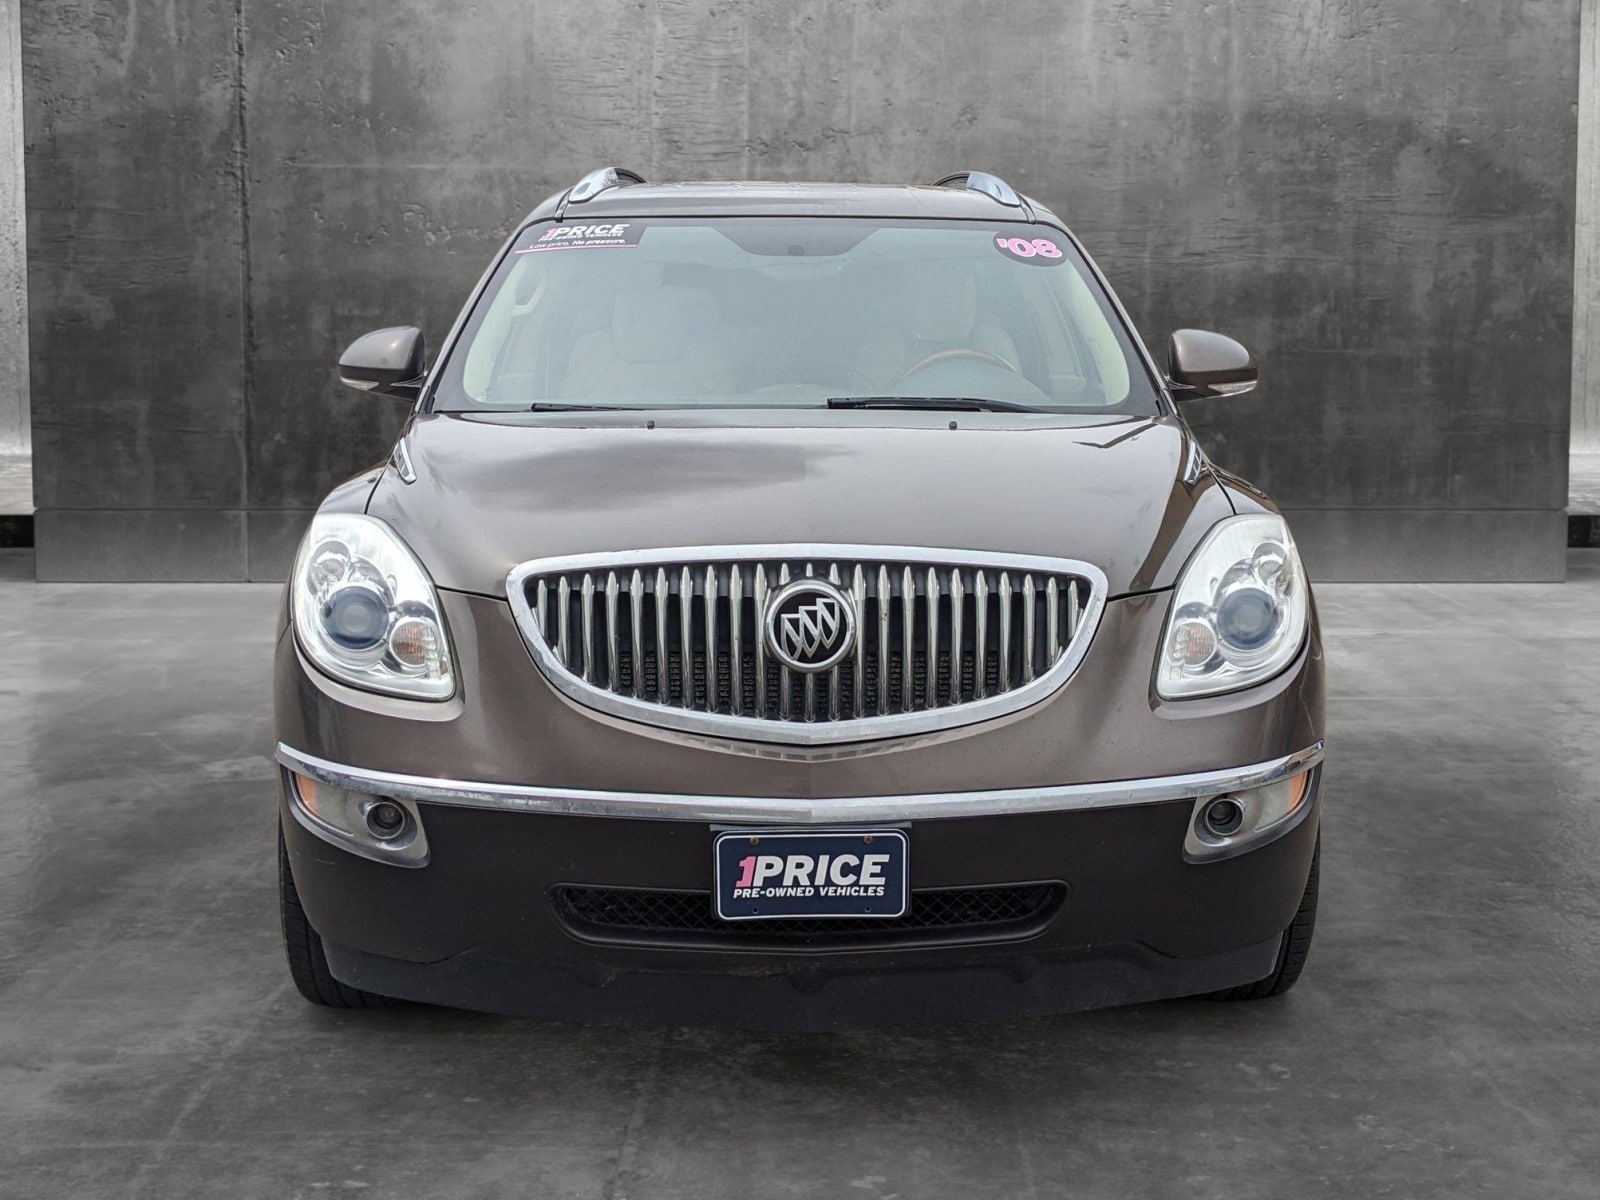 Used 2008 Buick Enclave CXL with VIN 5GAEV23778J139982 for sale in Golden, CO